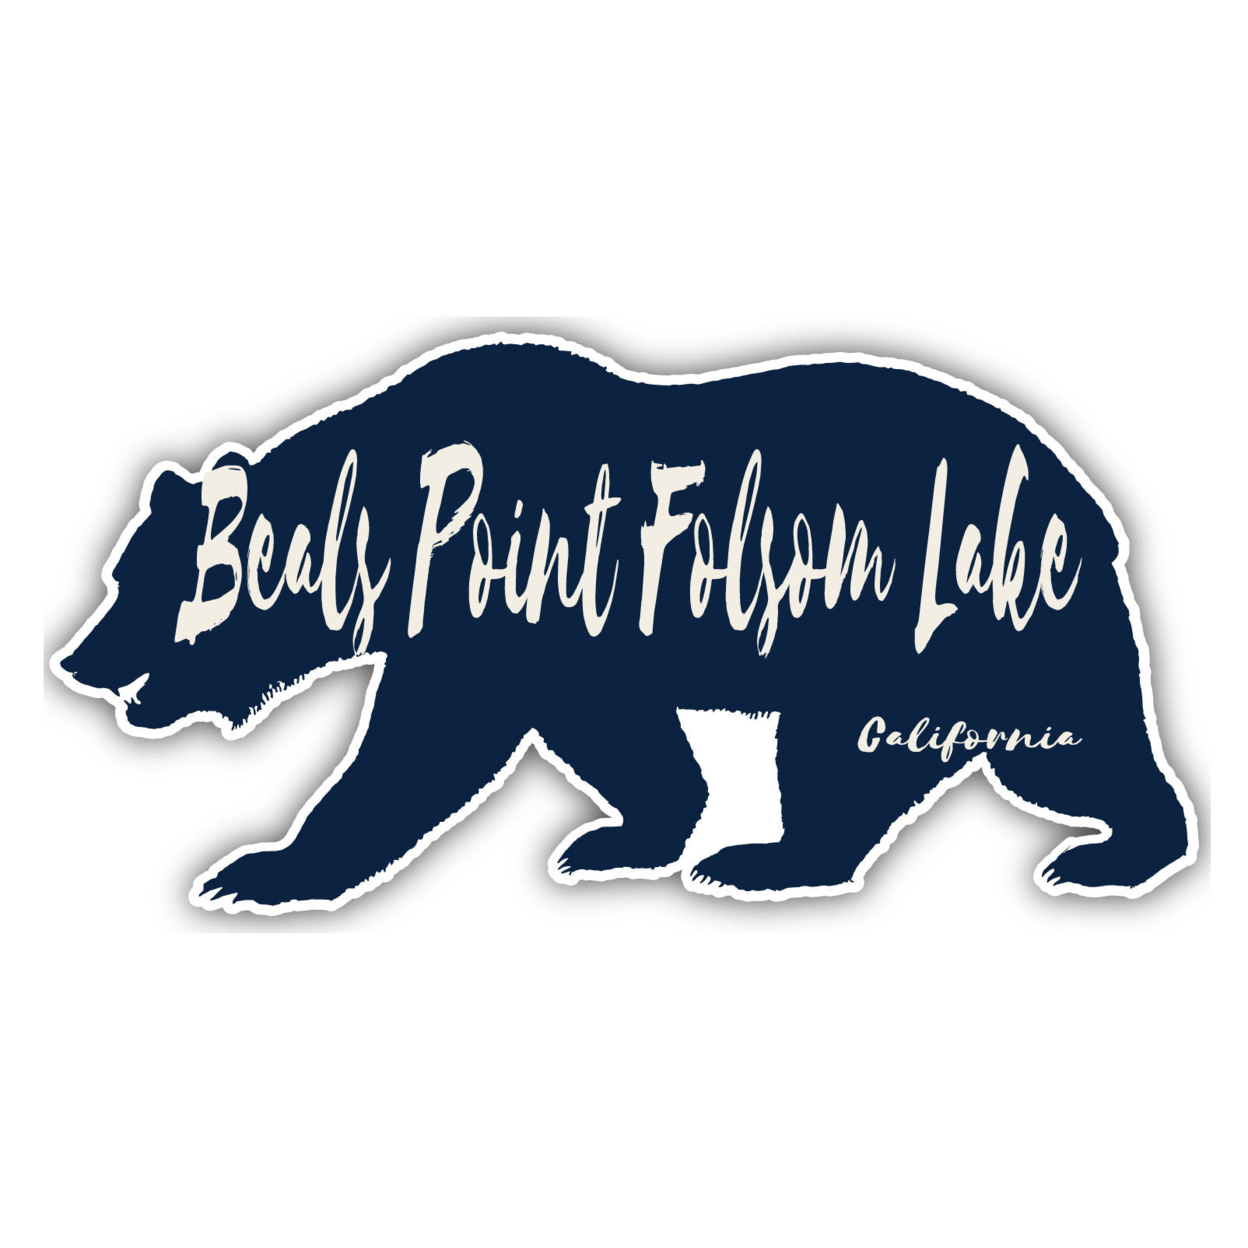 Beals Point Folsom Lake California Souvenir Decorative Stickers (Choose Theme And Size) - Single Unit, 8-Inch, Tent